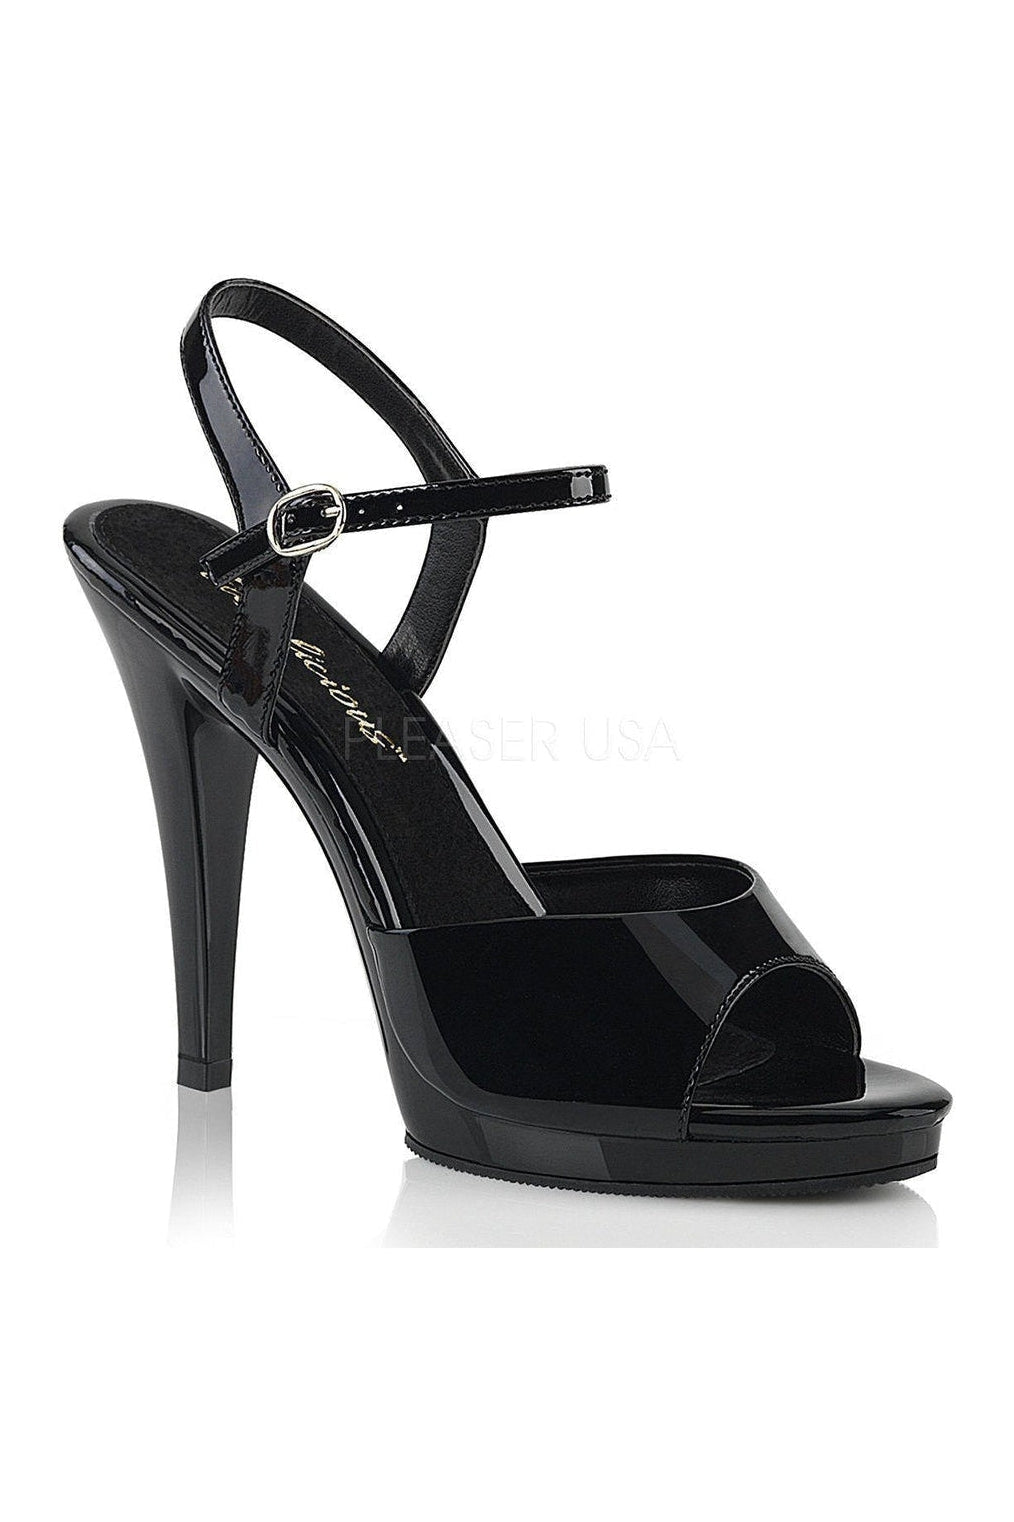 FLAIR-409 Sandal | Black Patent-Fabulicious-Black-Sandals-SEXYSHOES.COM